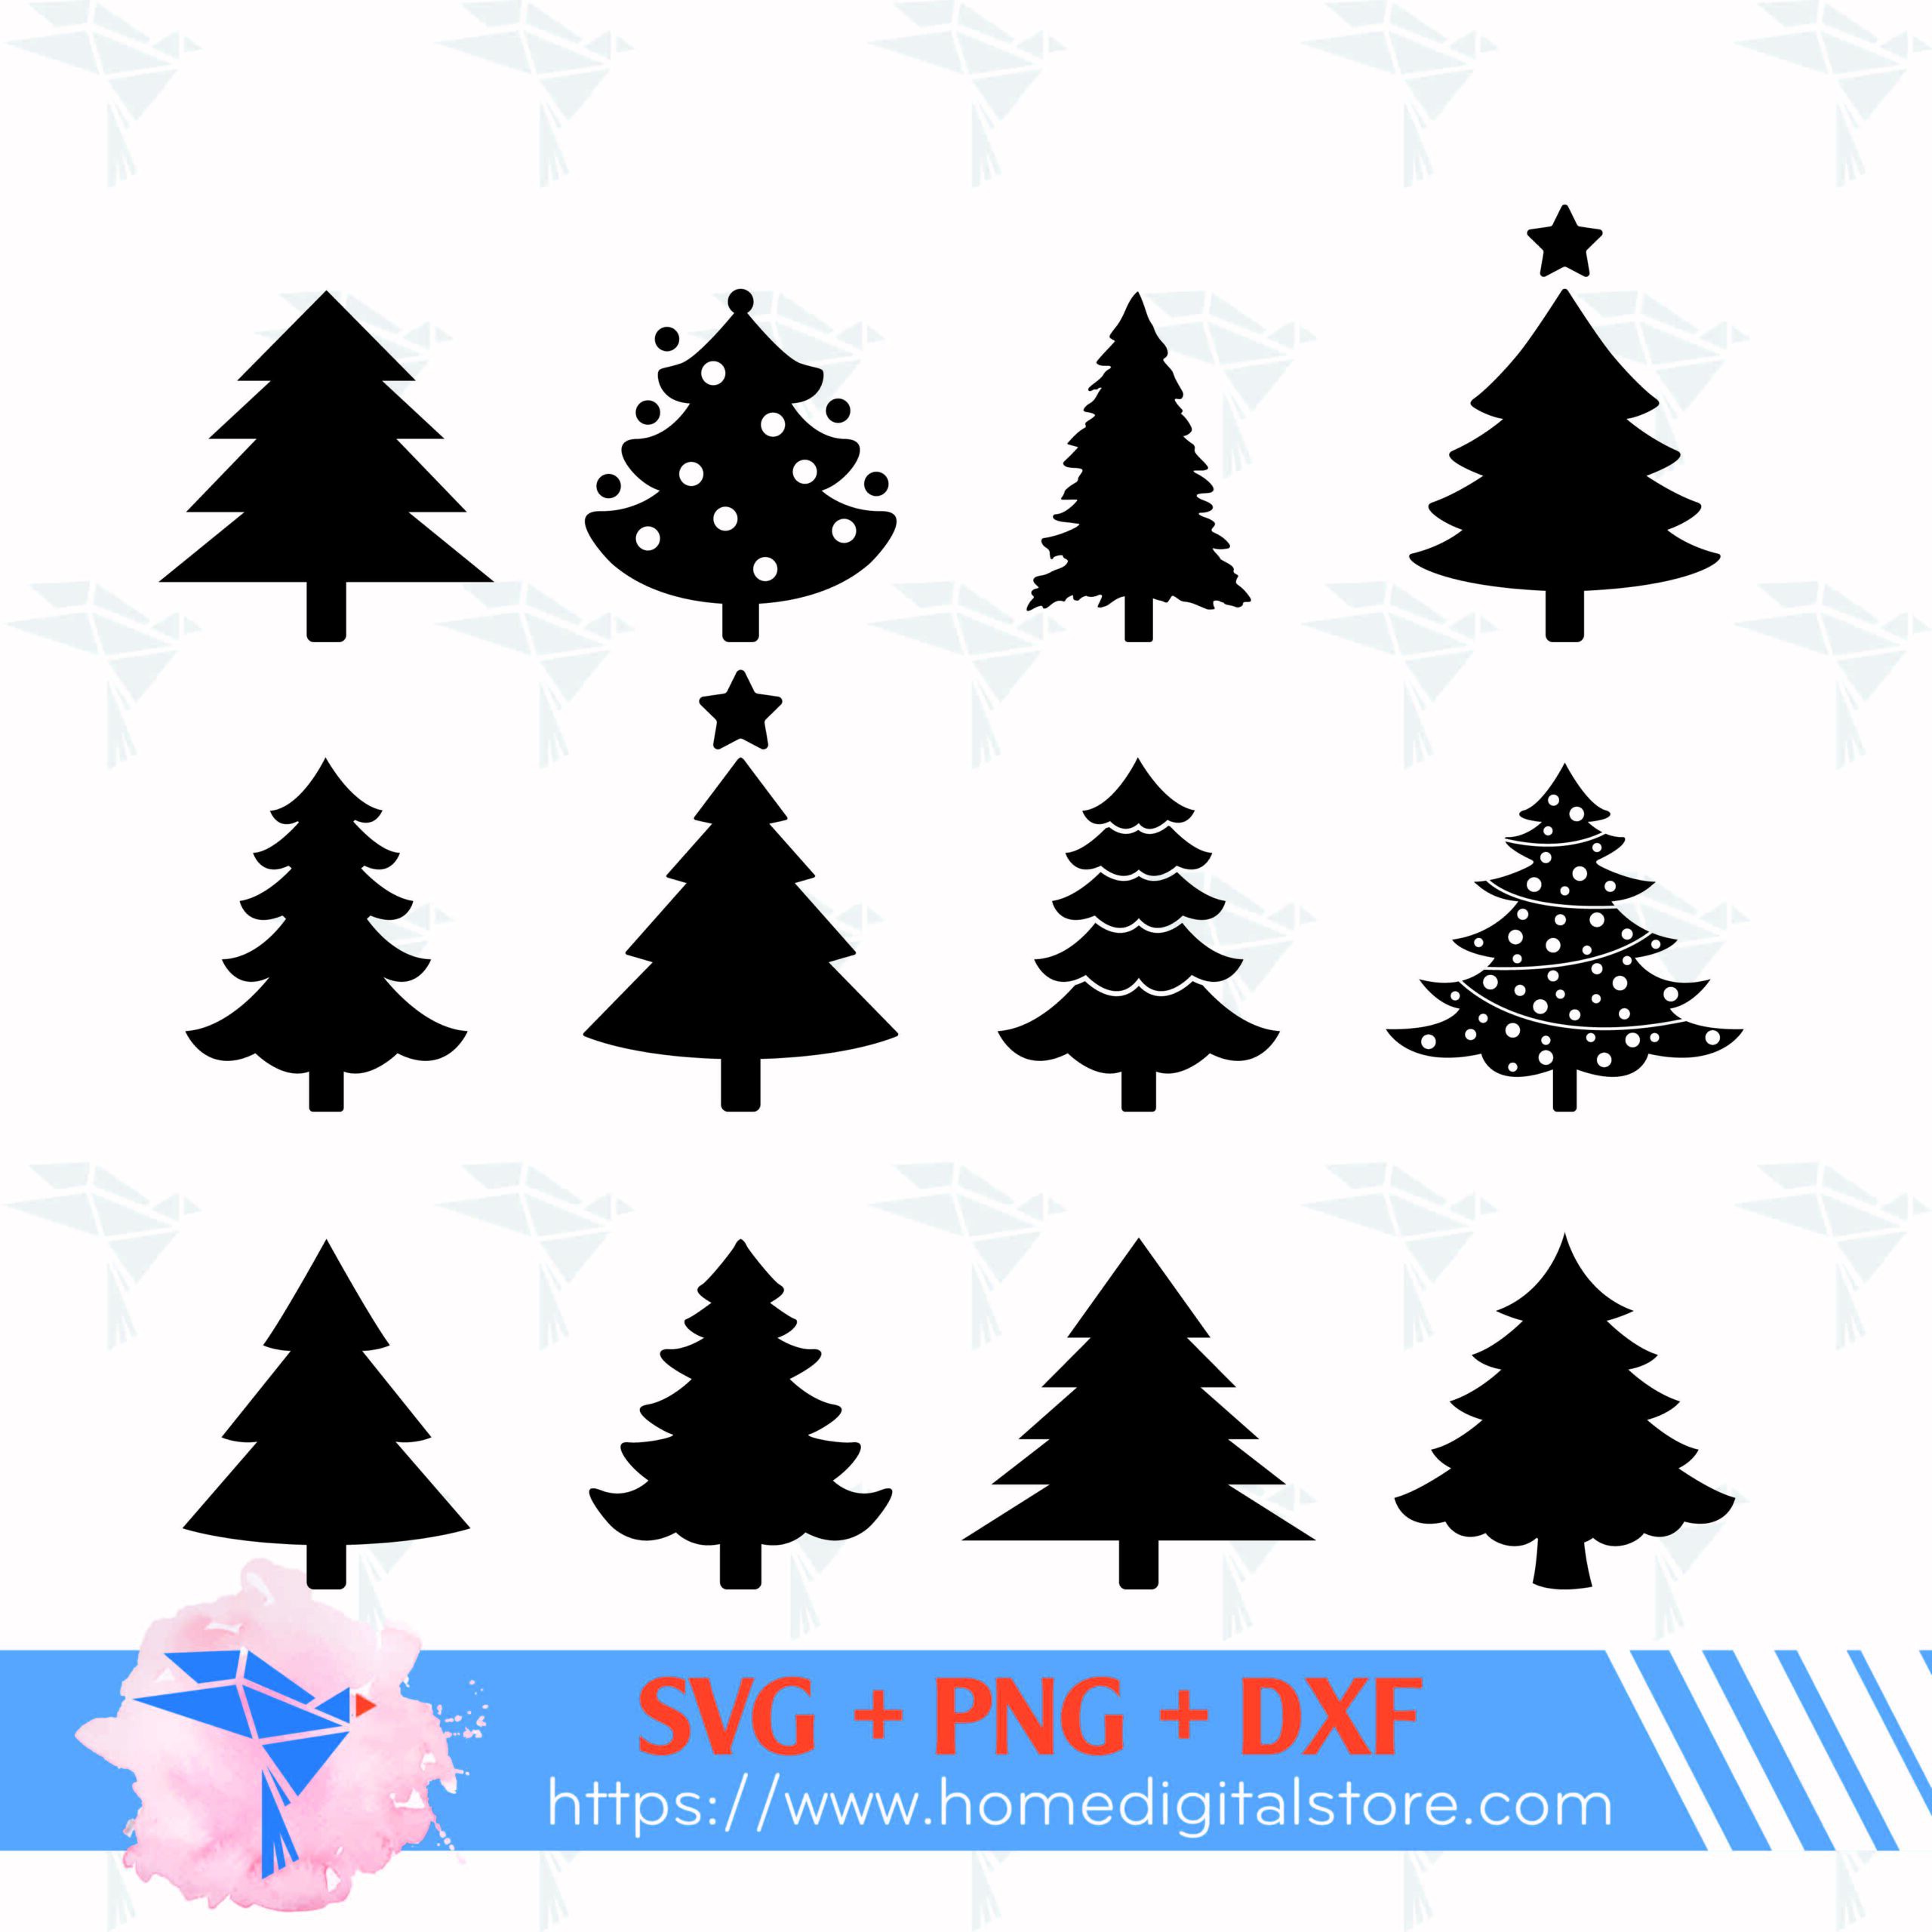 https://homedigitalstore.com/wp-content/uploads/2020/11/Christmas-Tree-11-01-scaled.jpg